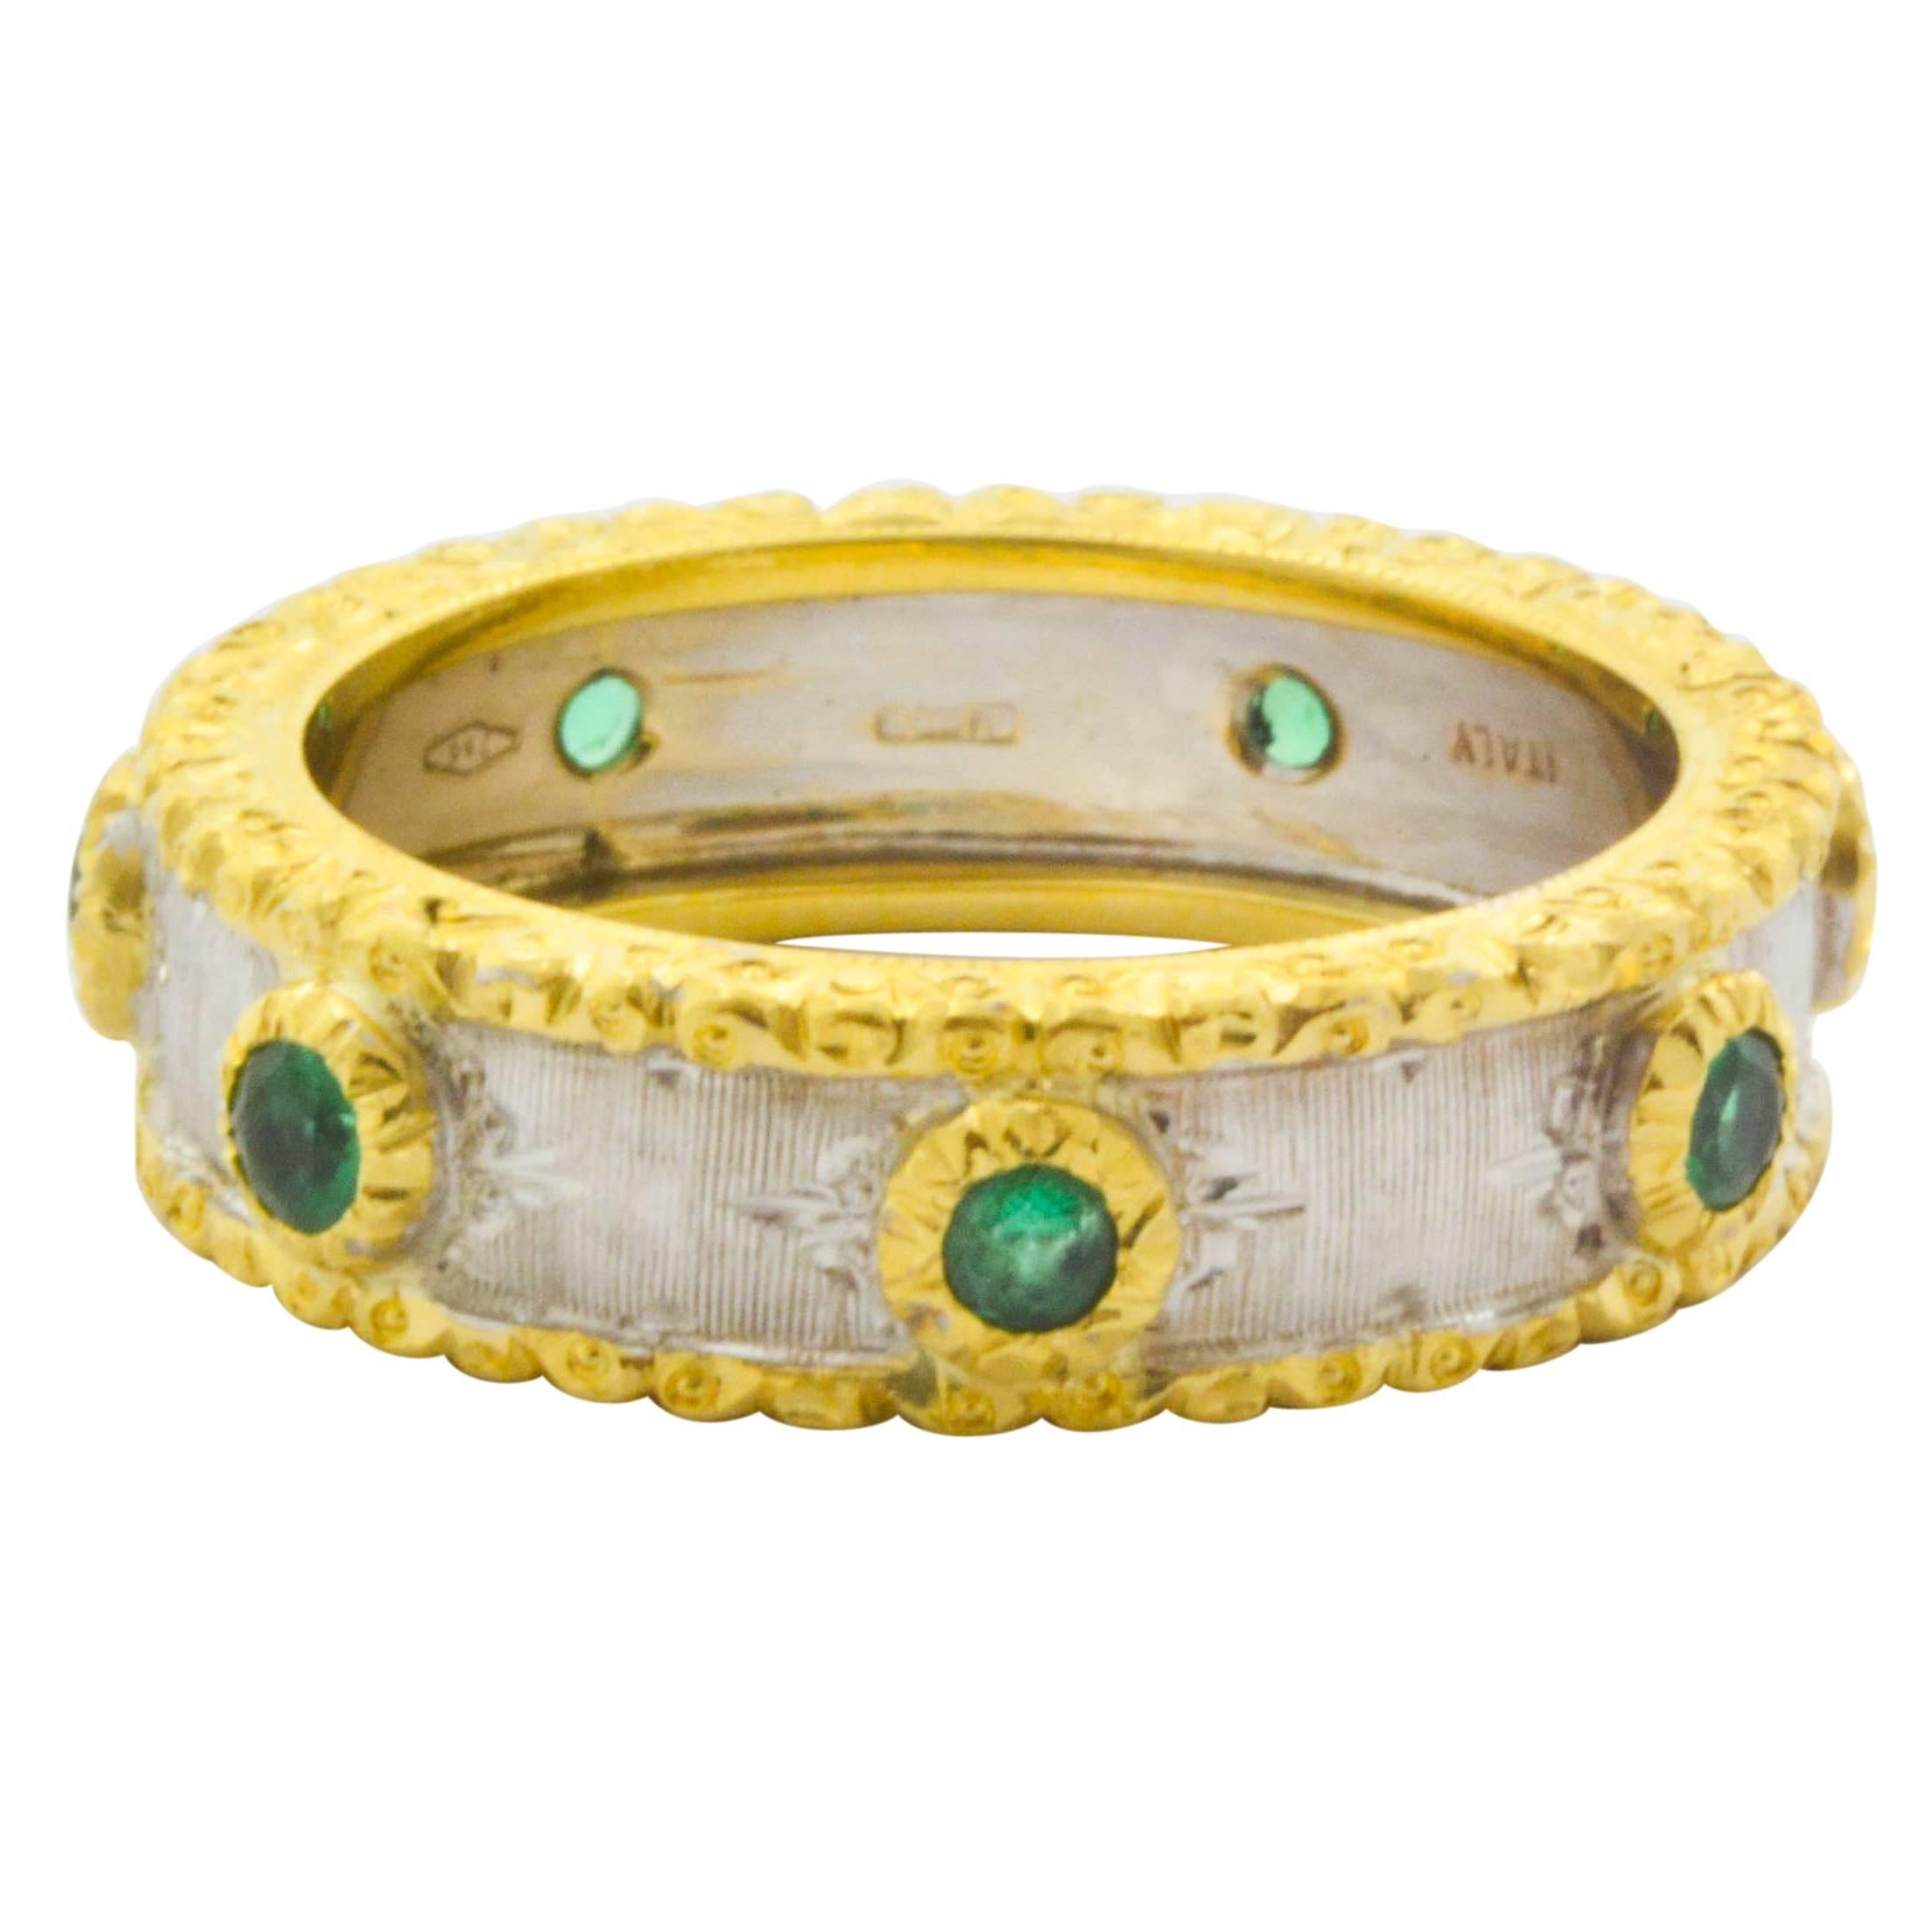 Italian Maini Gioielli Emerald 18 Karat Gold Ring with Hand Engraved Finish